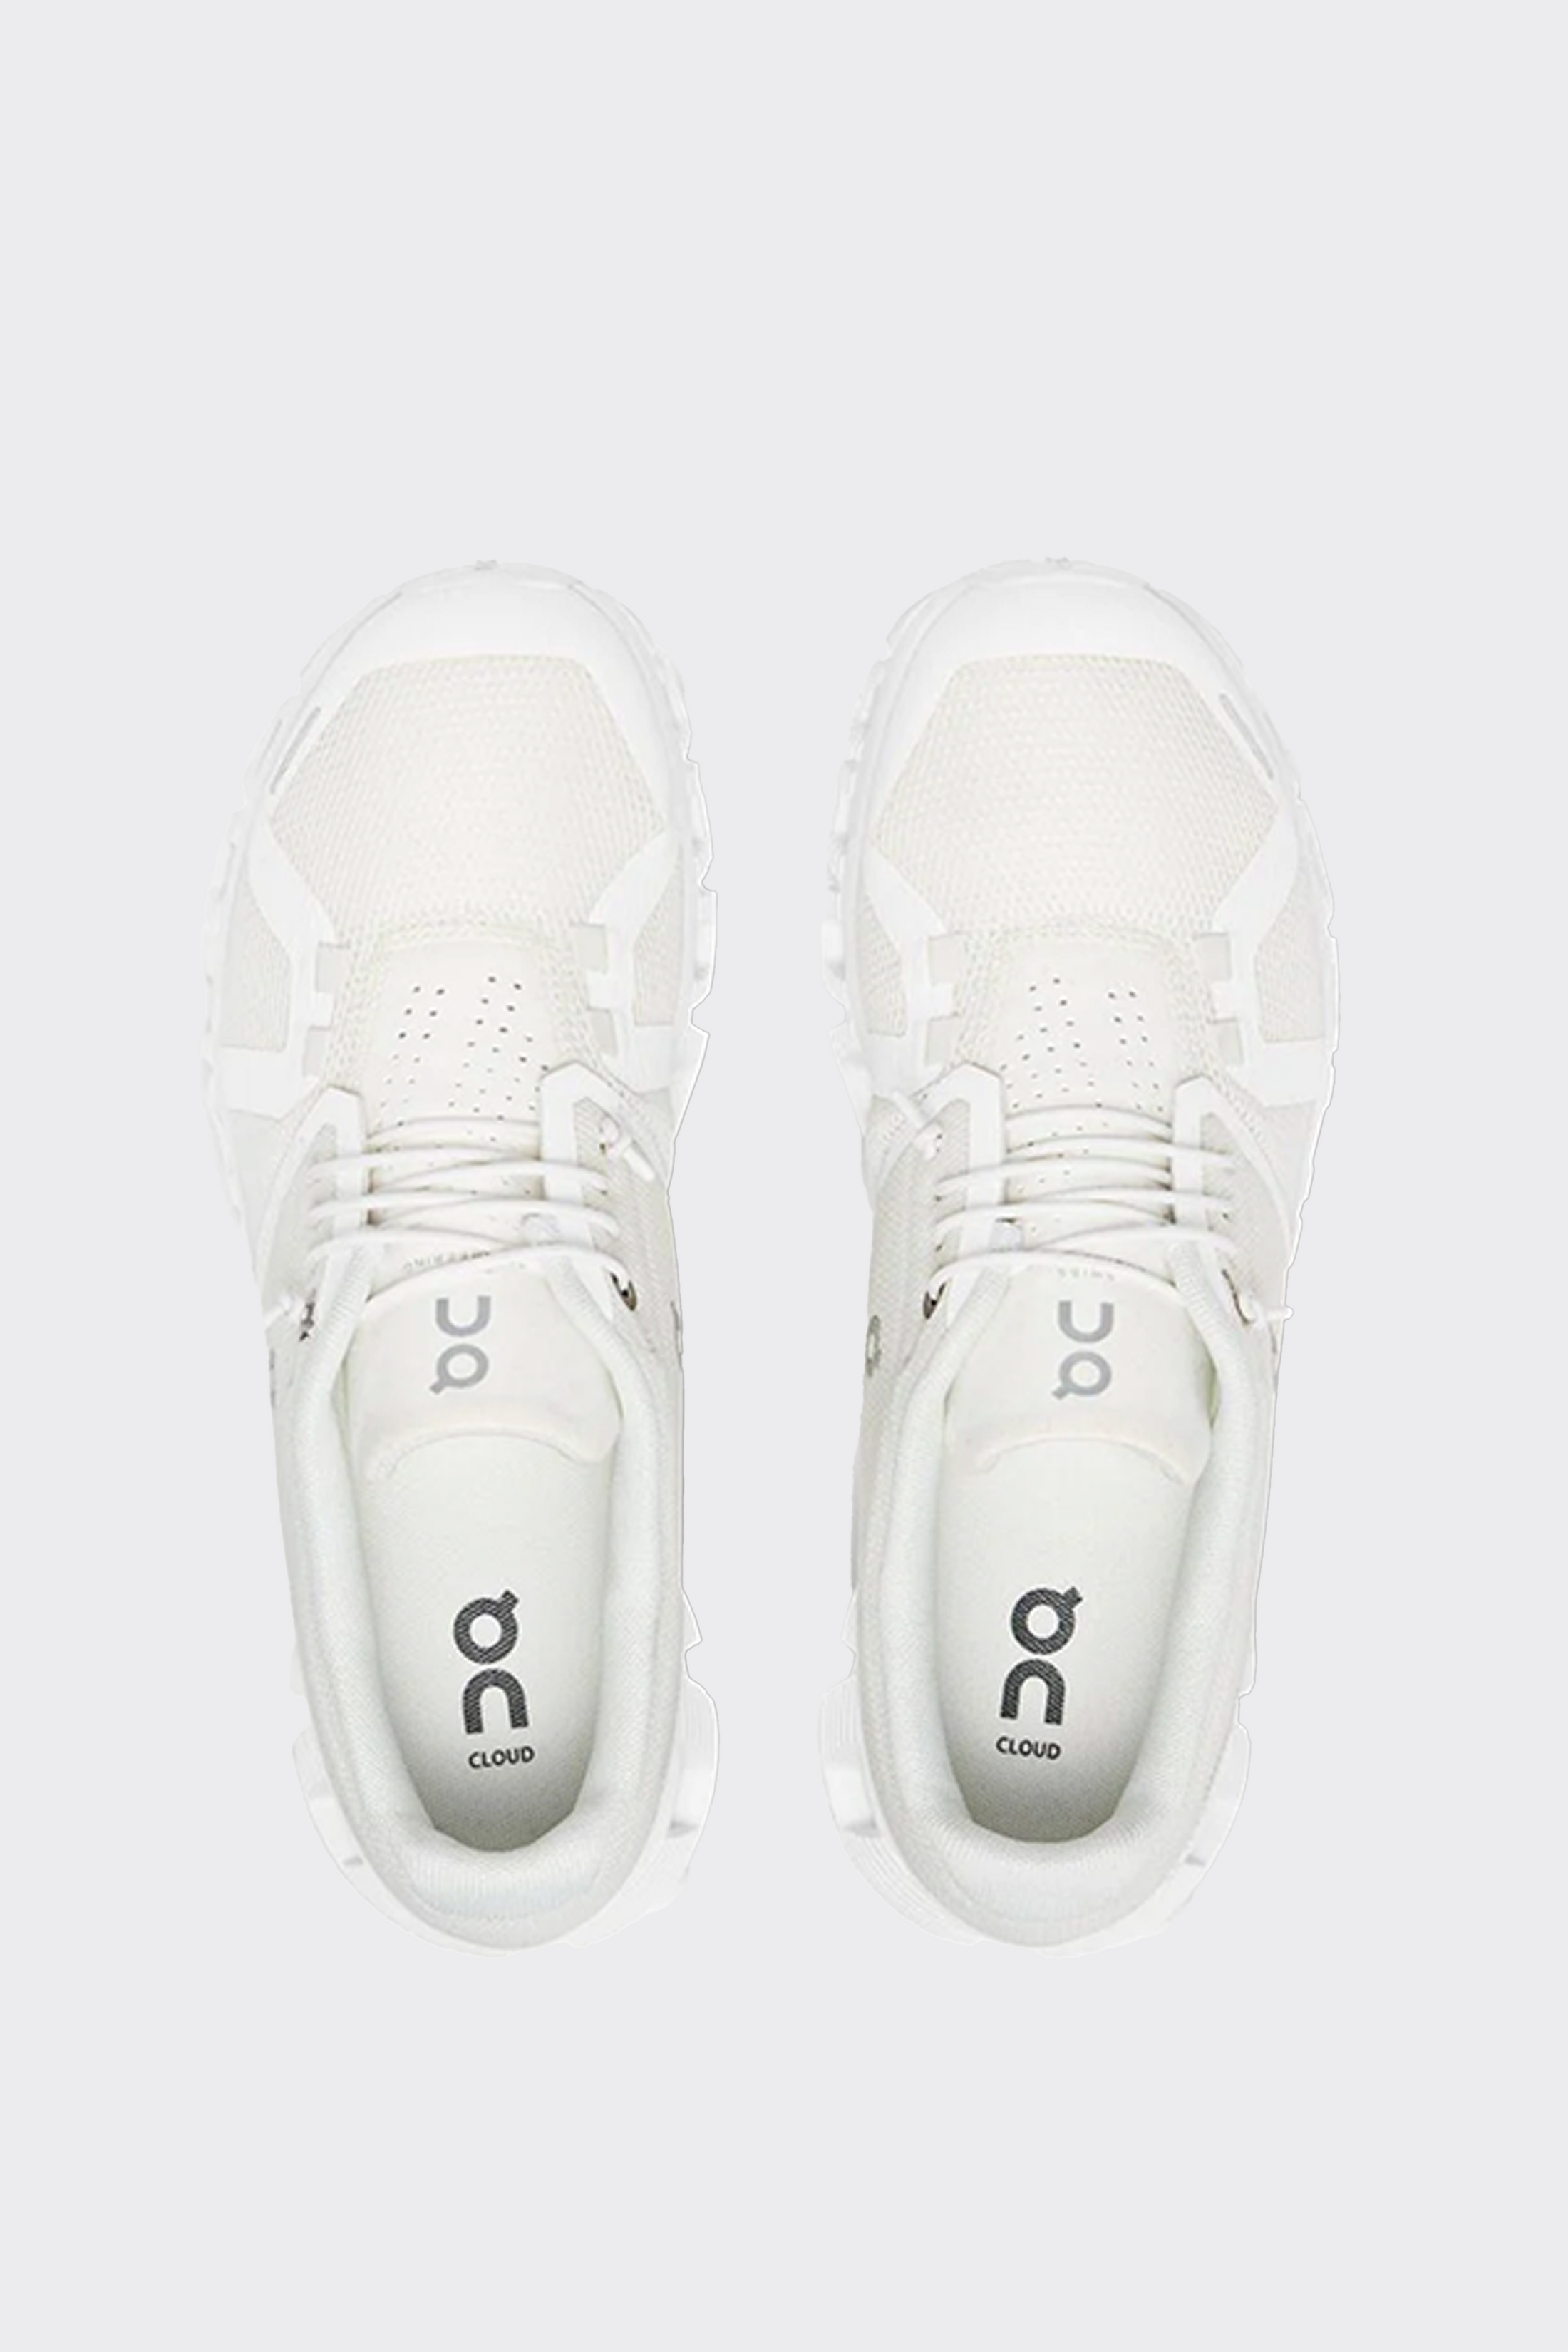 CLOUD 5 White Sneakers